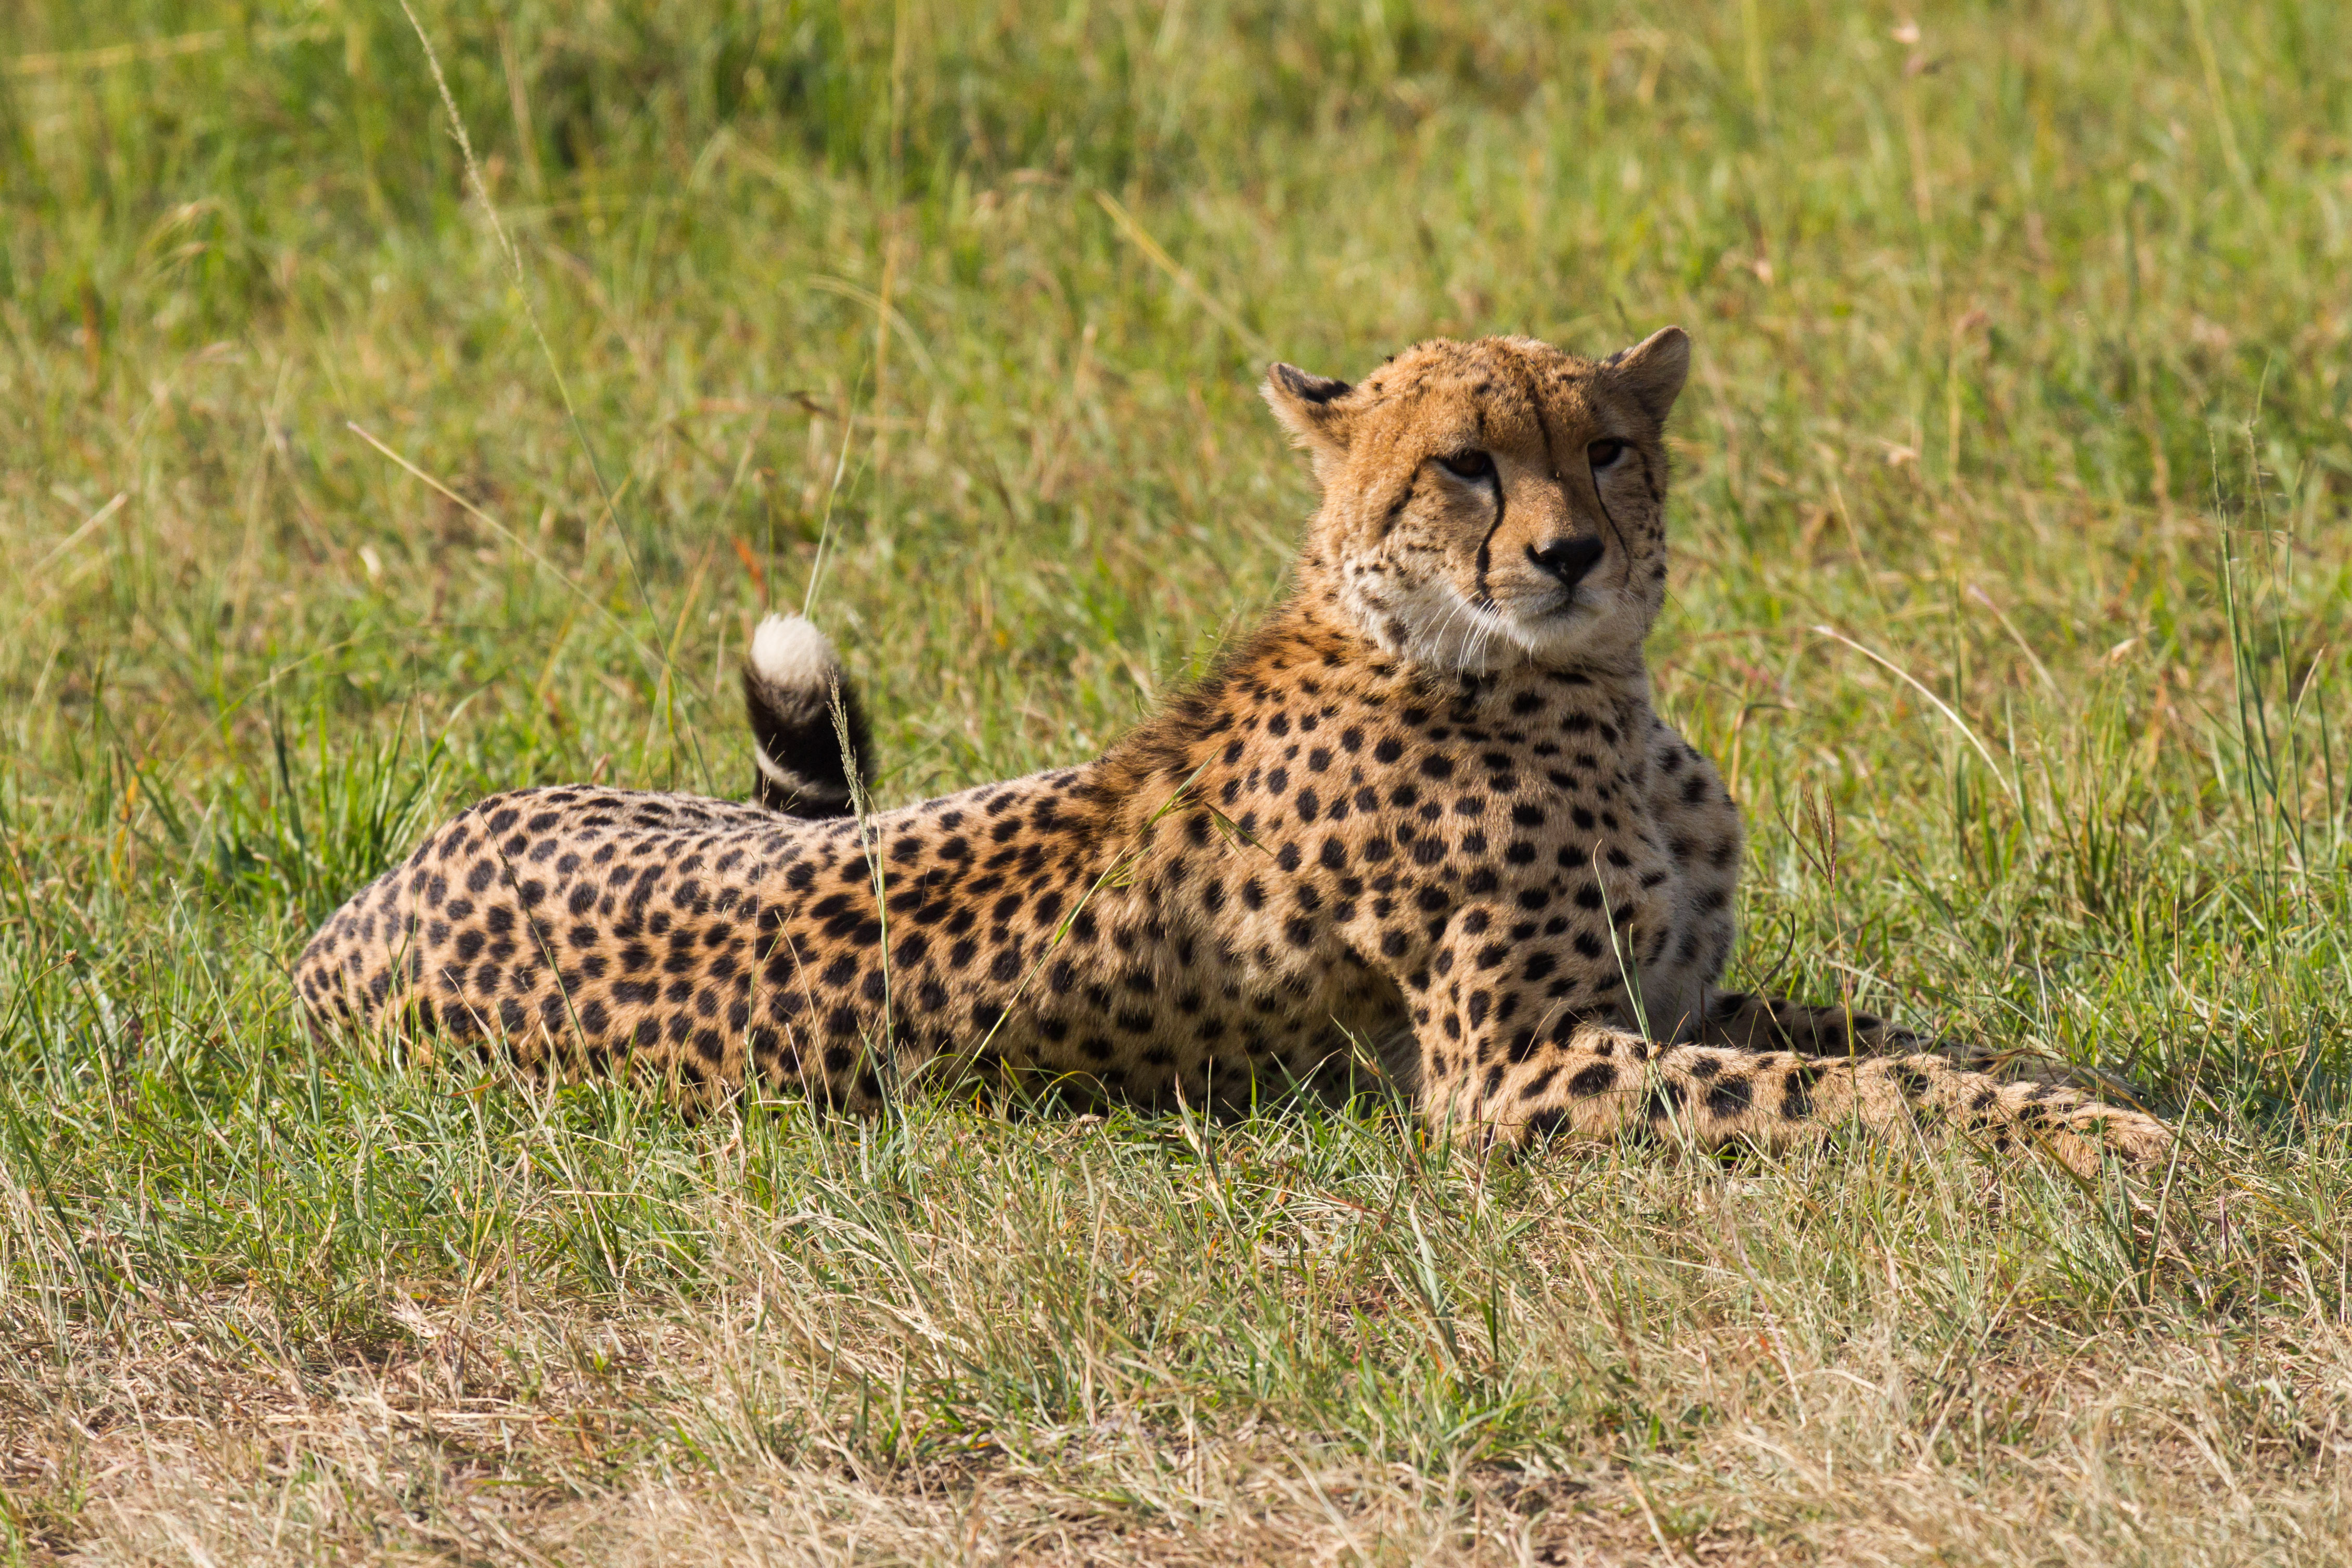 File:Resting Cheetah.jpg - Wikimedia Commons